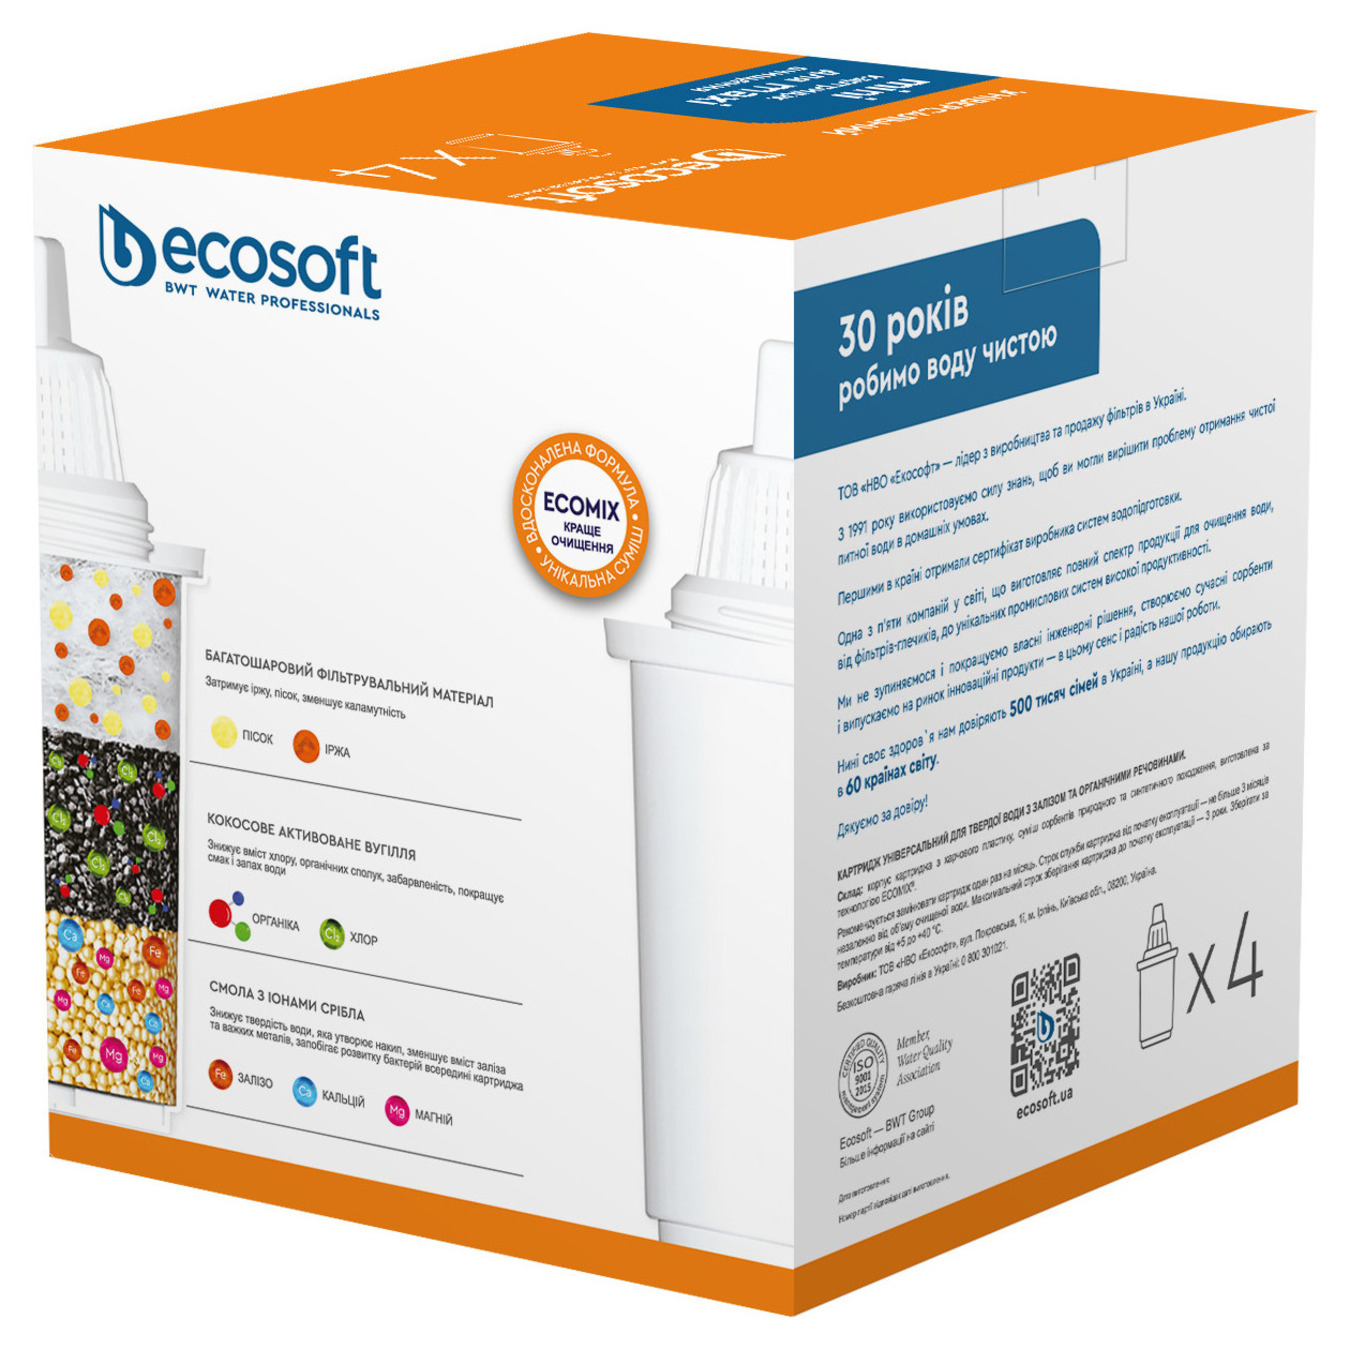 A set of Ecosoft universal 3+1 cartridges